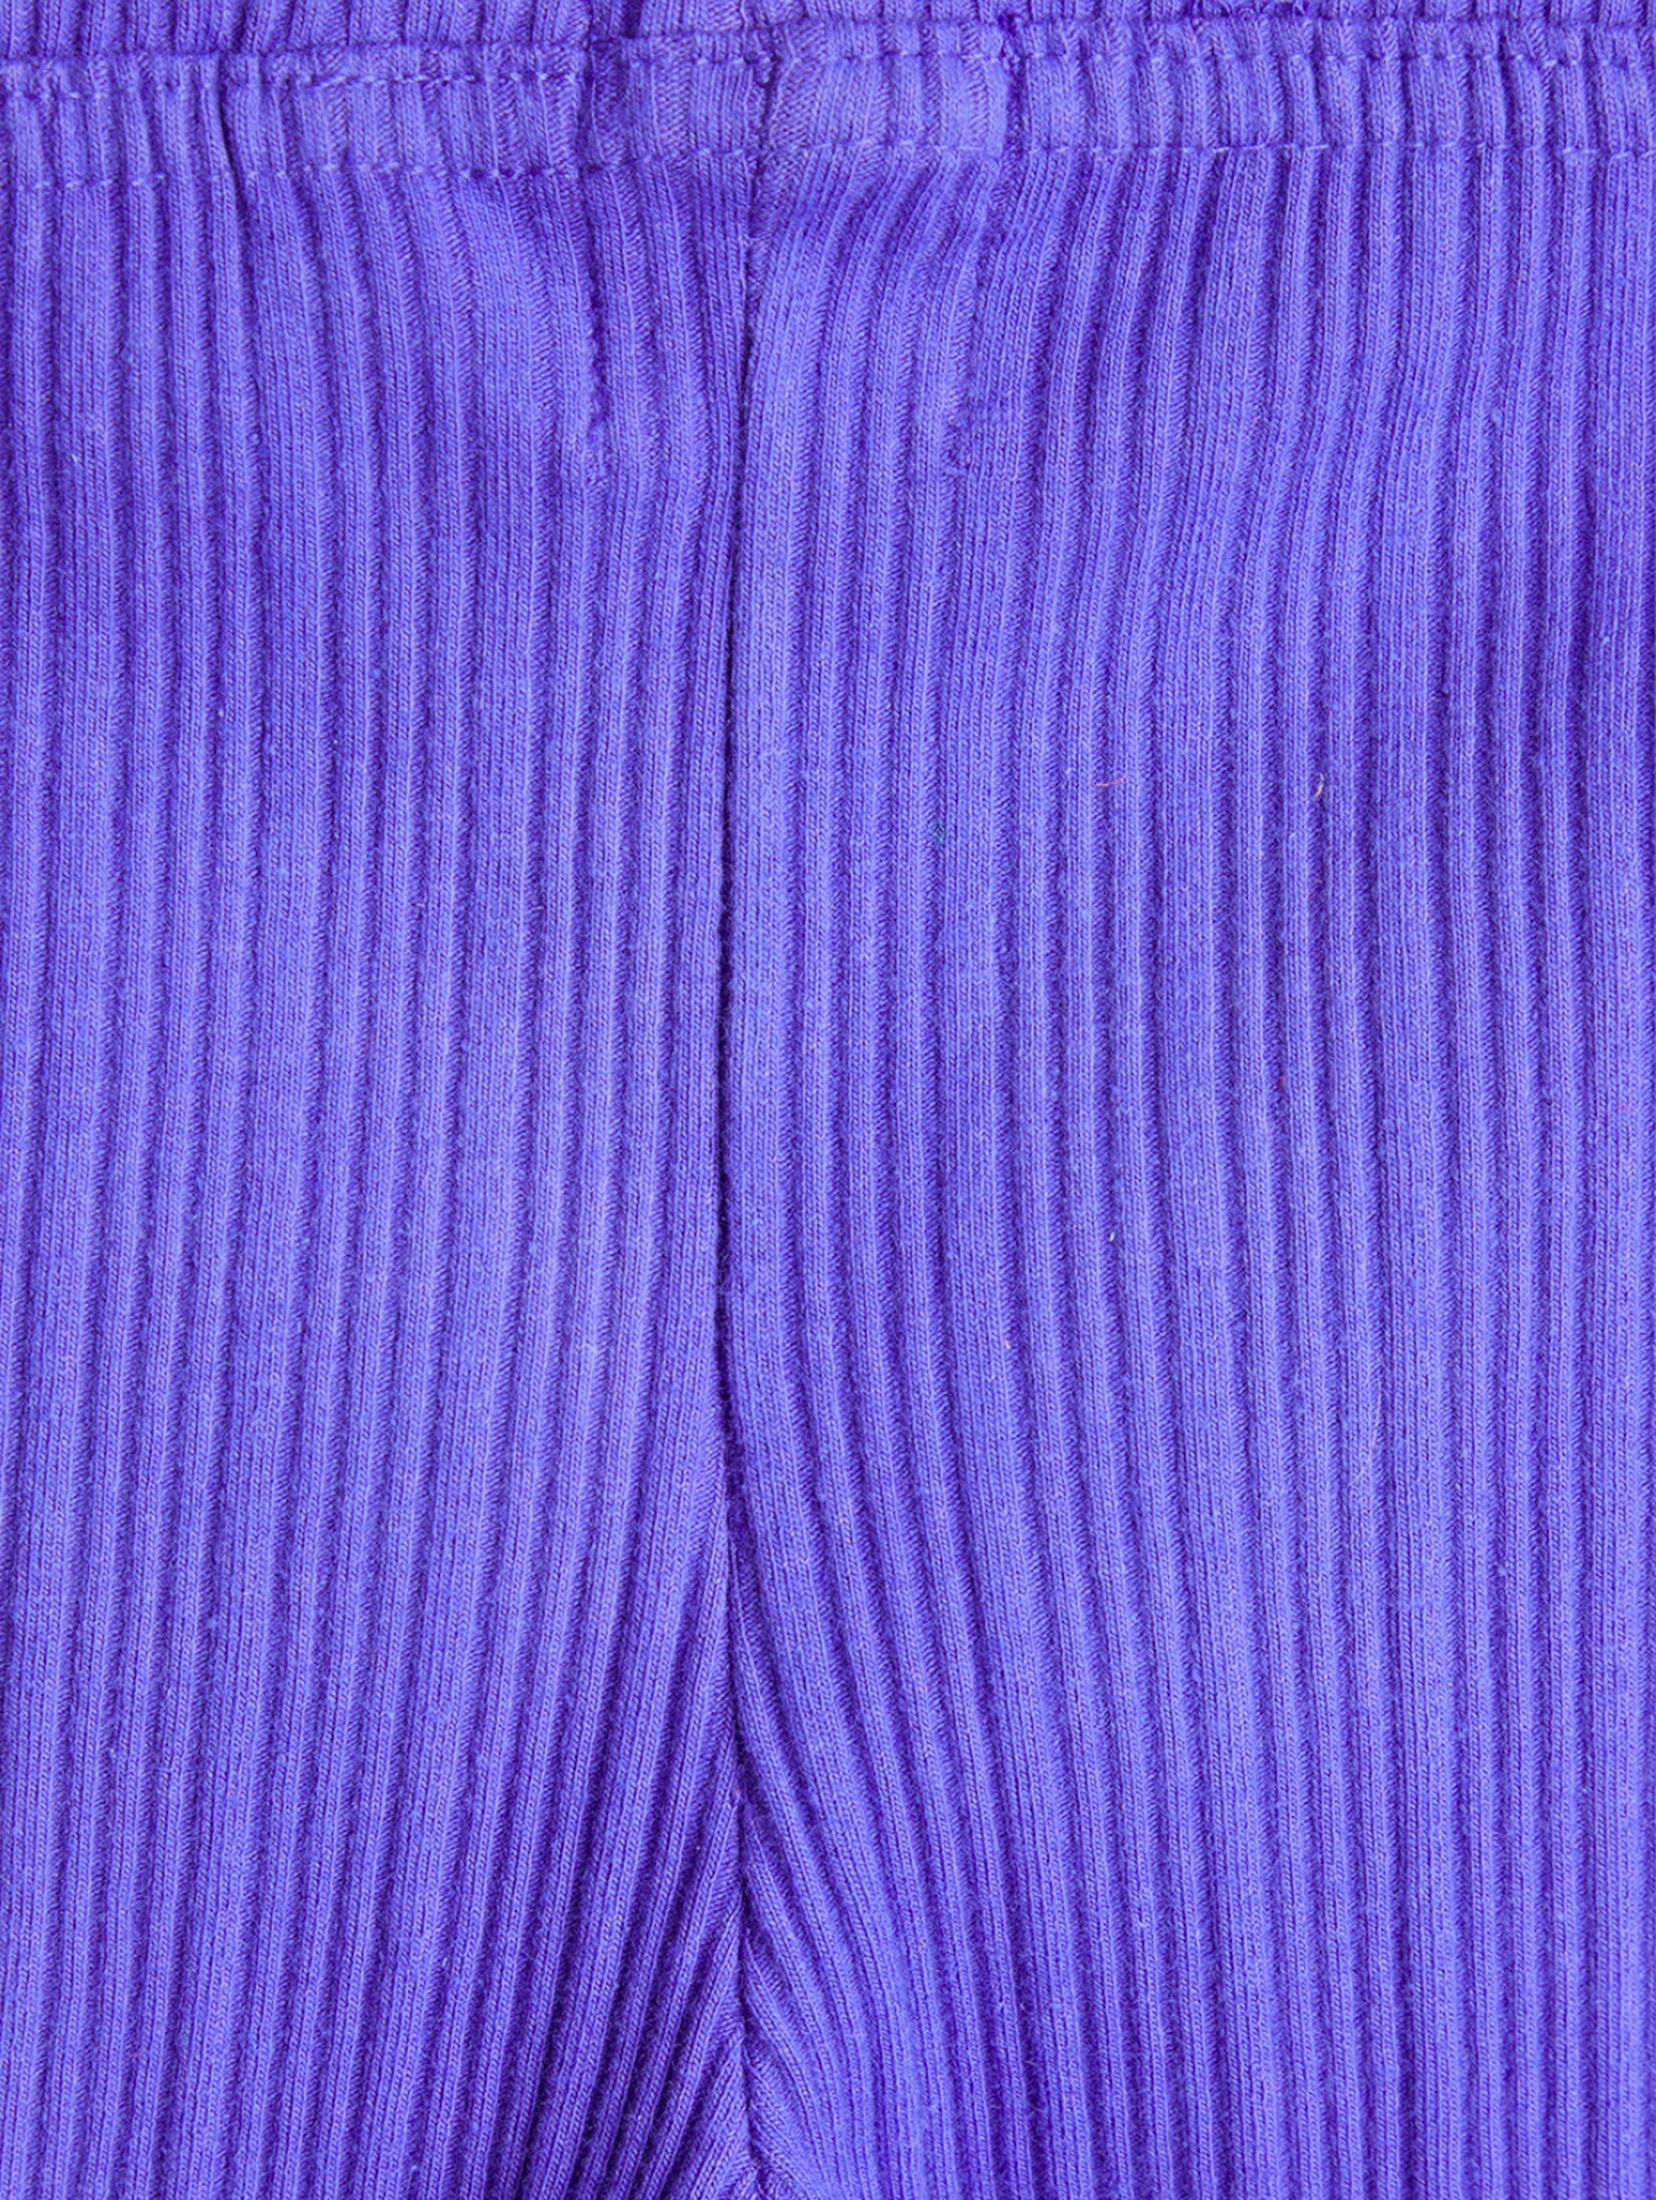 Spodnie flare - fioletowe w prążki - Limited Edition